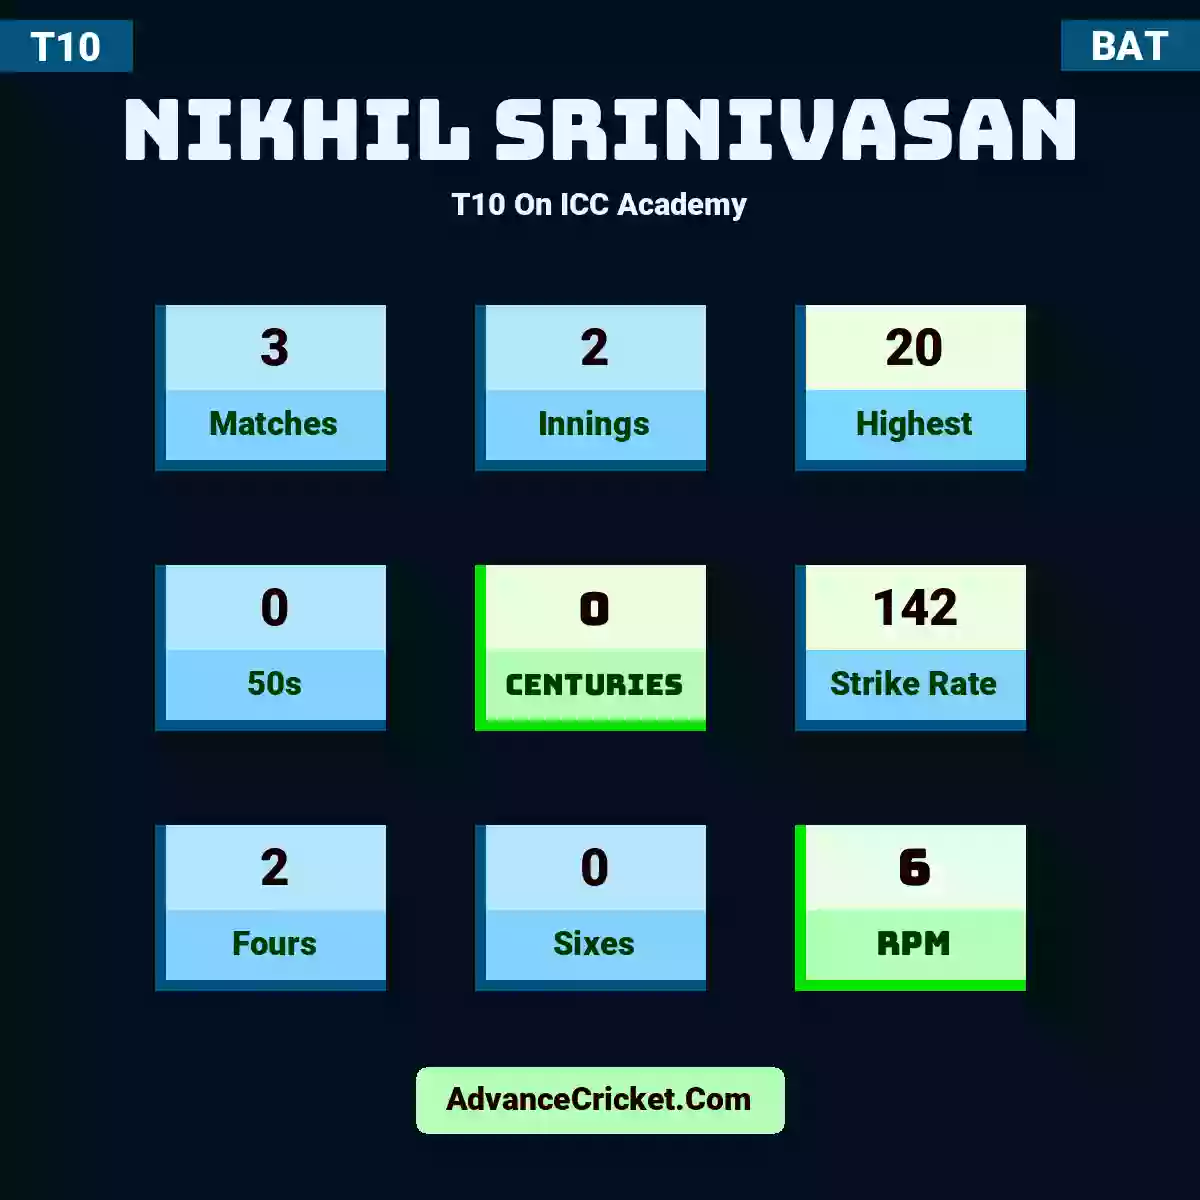 Nikhil Srinivasan T10  On ICC Academy, Nikhil Srinivasan played 3 matches, scored 20 runs as highest, 0 half-centuries, and 0 centuries, with a strike rate of 142. N.Srinivasan hit 2 fours and 0 sixes, with an RPM of 6.